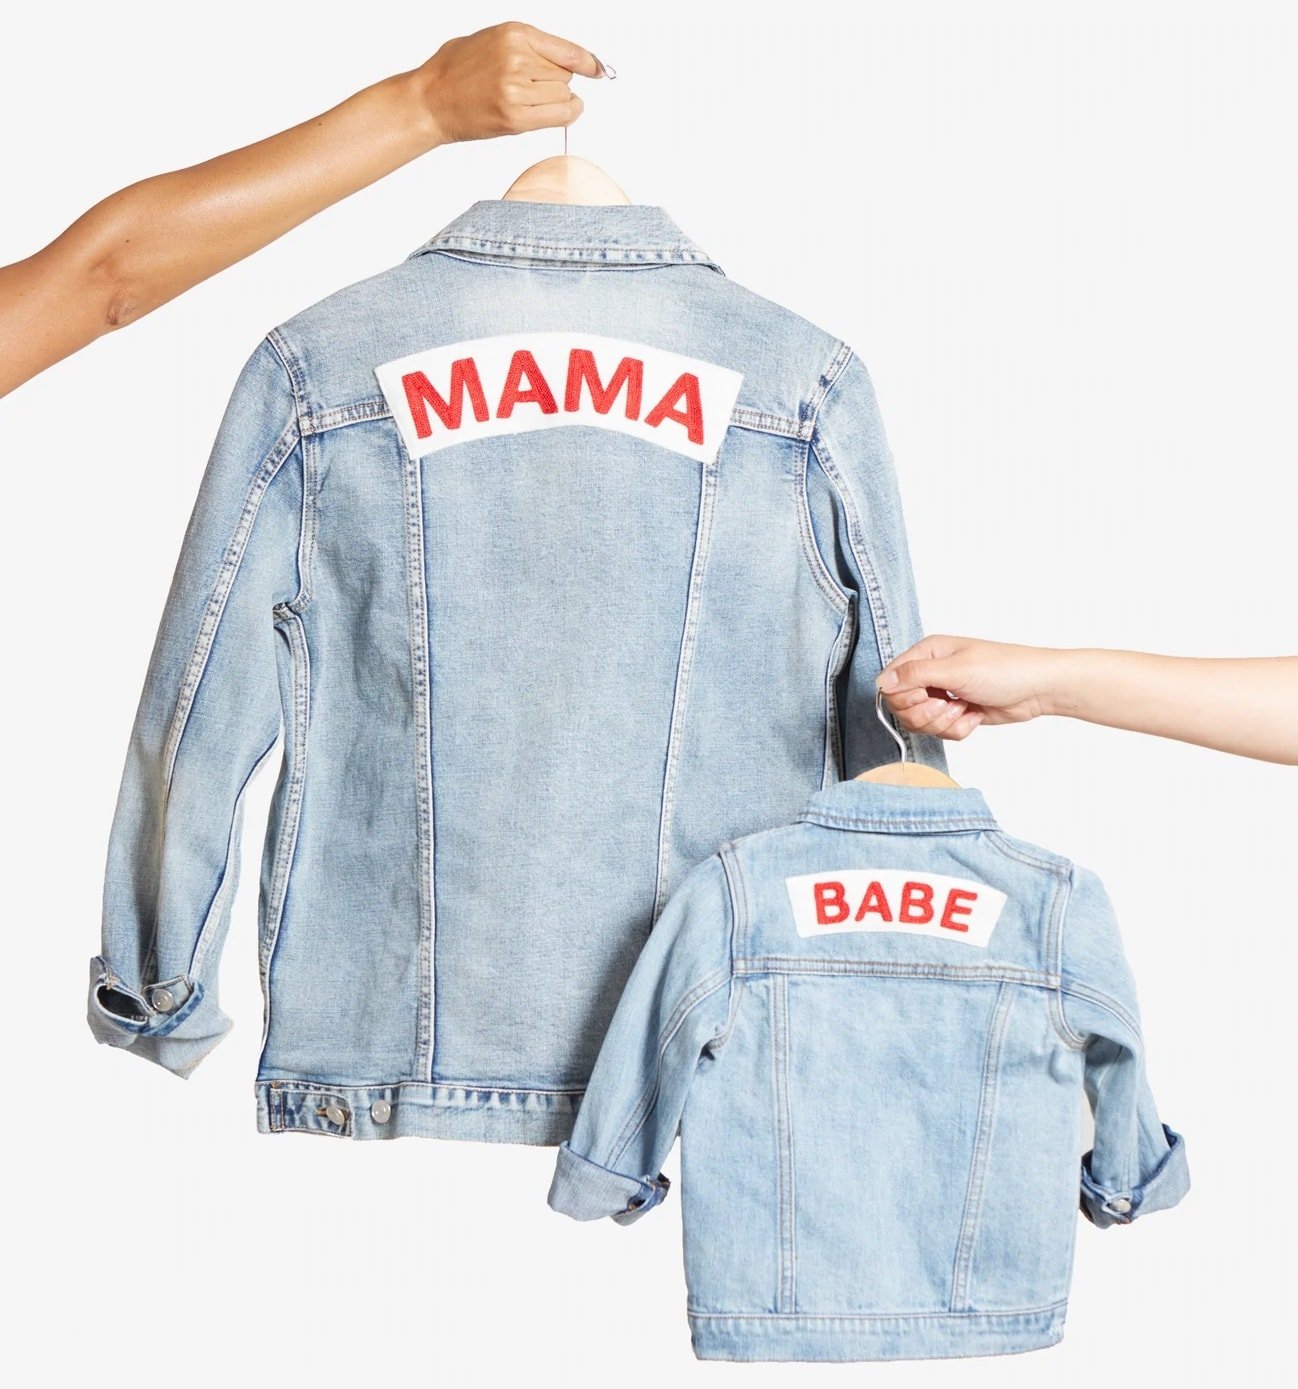 Mama and Babe denim jackets